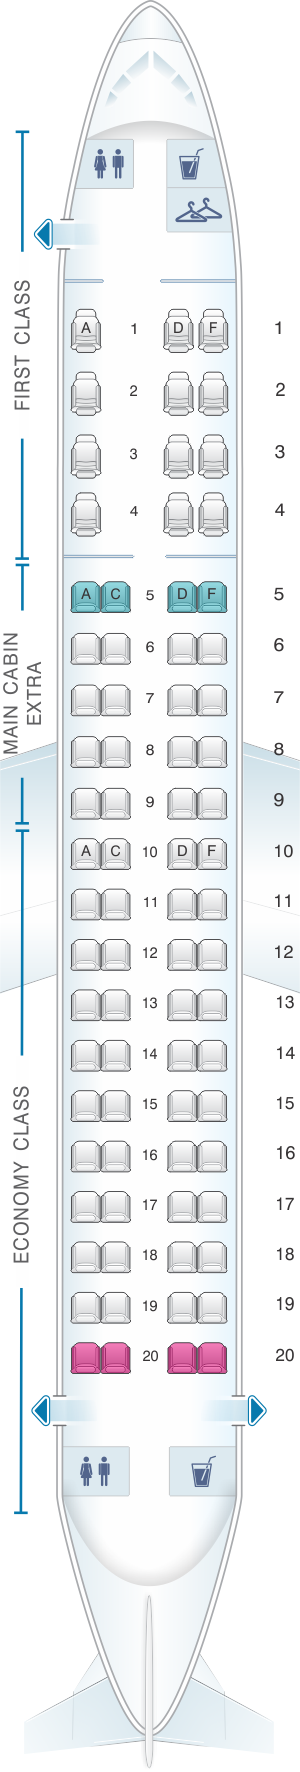 Seat map for American Airlines Embraer ERJ 175 V1